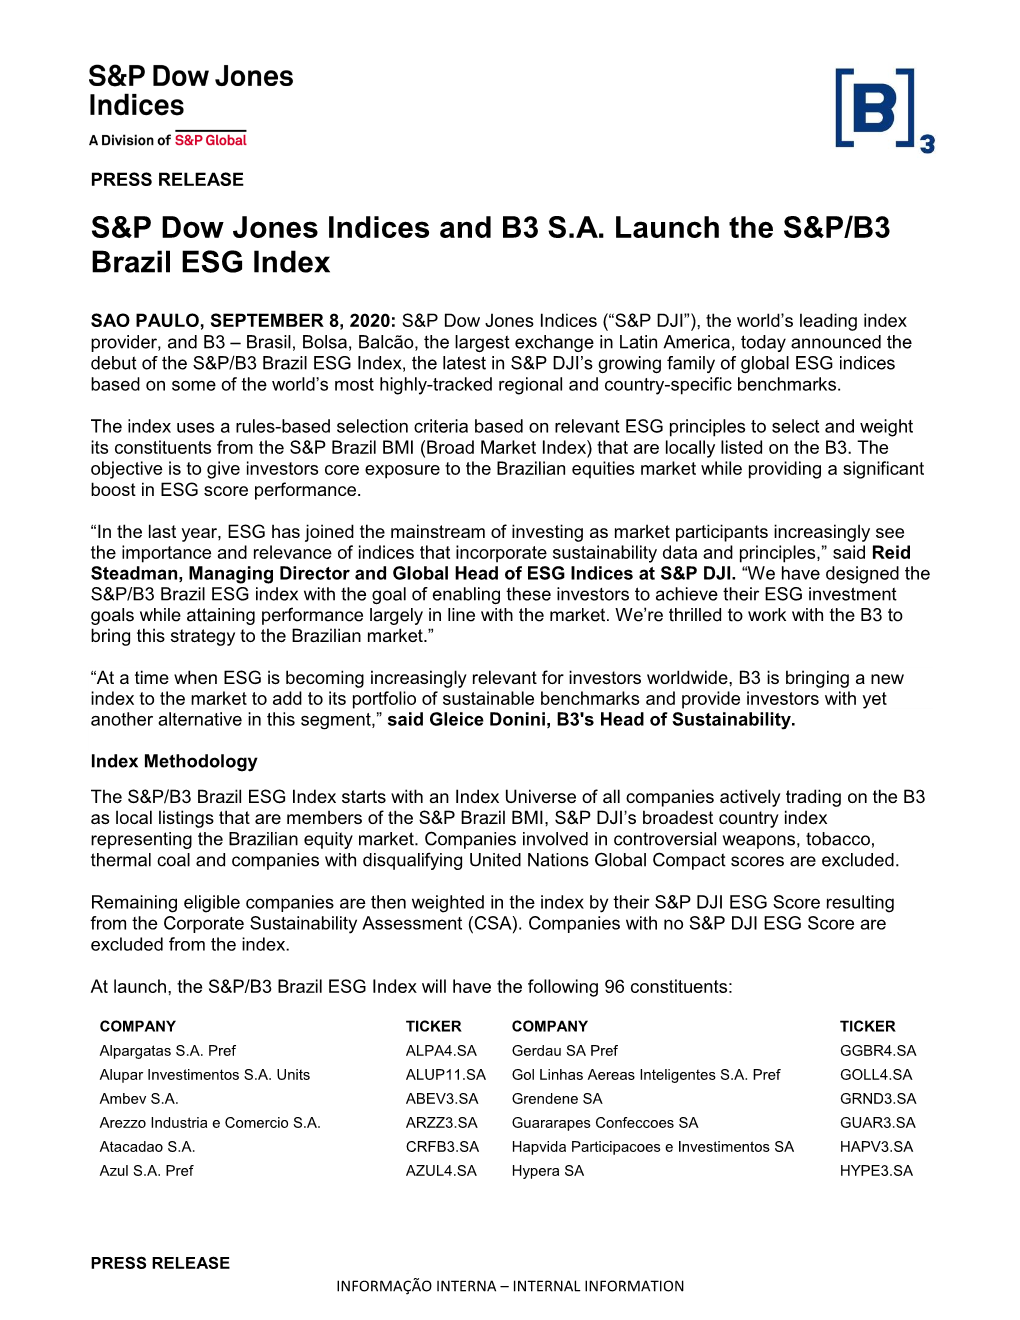 S&P Dow Jones Indices and B3 S.A. Launch the S&P/B3 Brazil ESG Index